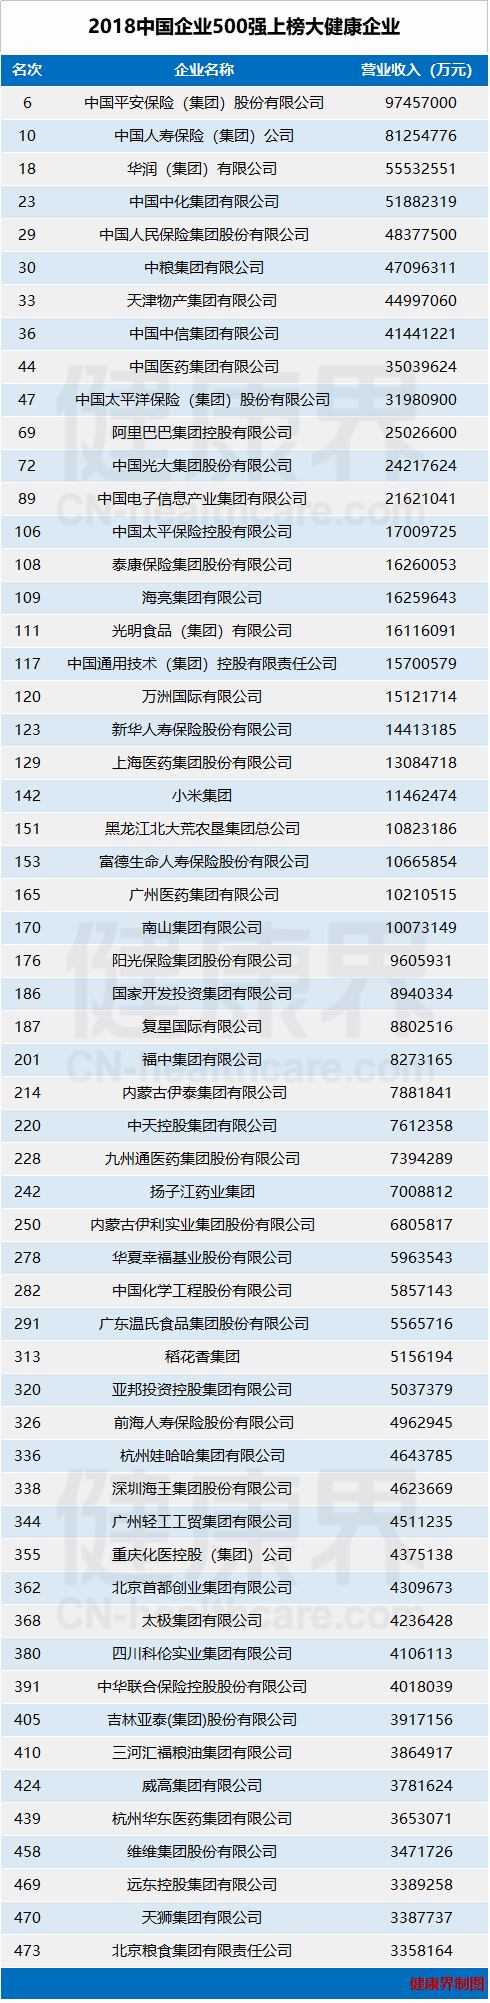 最全 | 2018年中国企业100强 大健康企业57家<font color="red">入围</font>